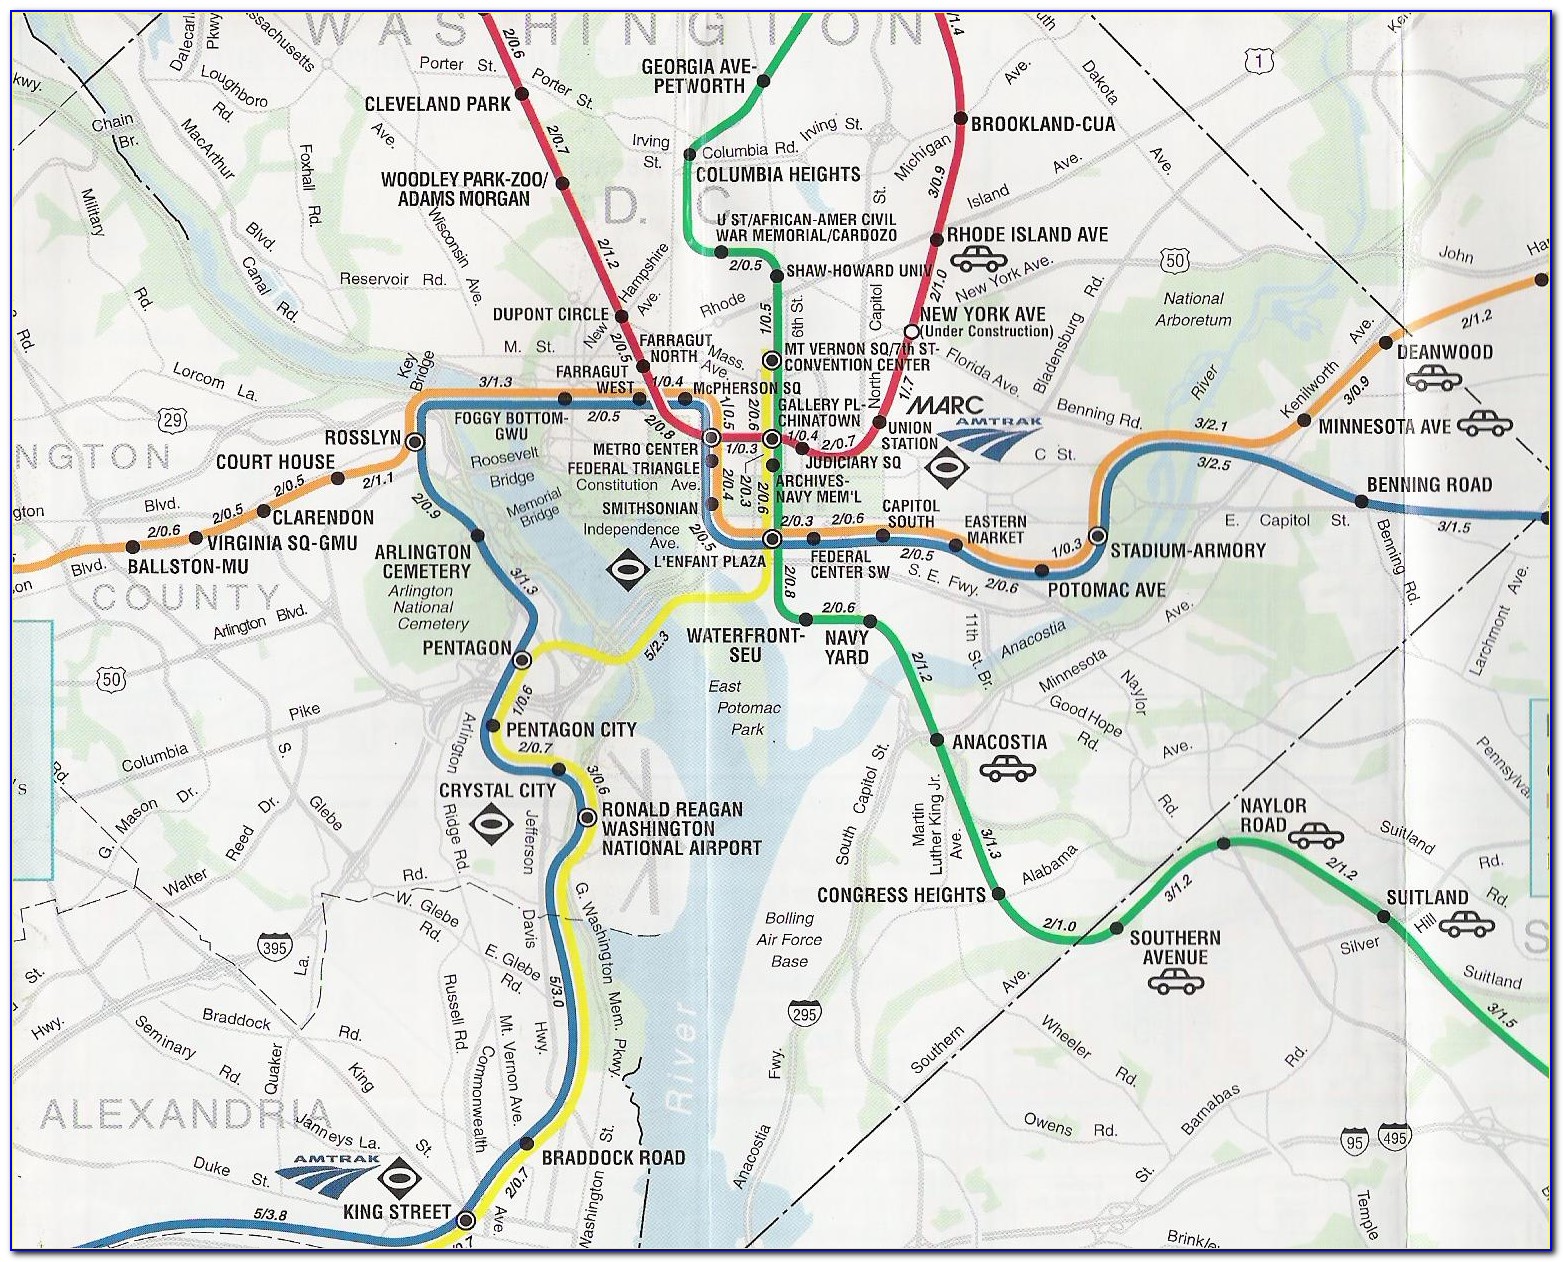 Street Map Of Washington Dc With Metro Stops